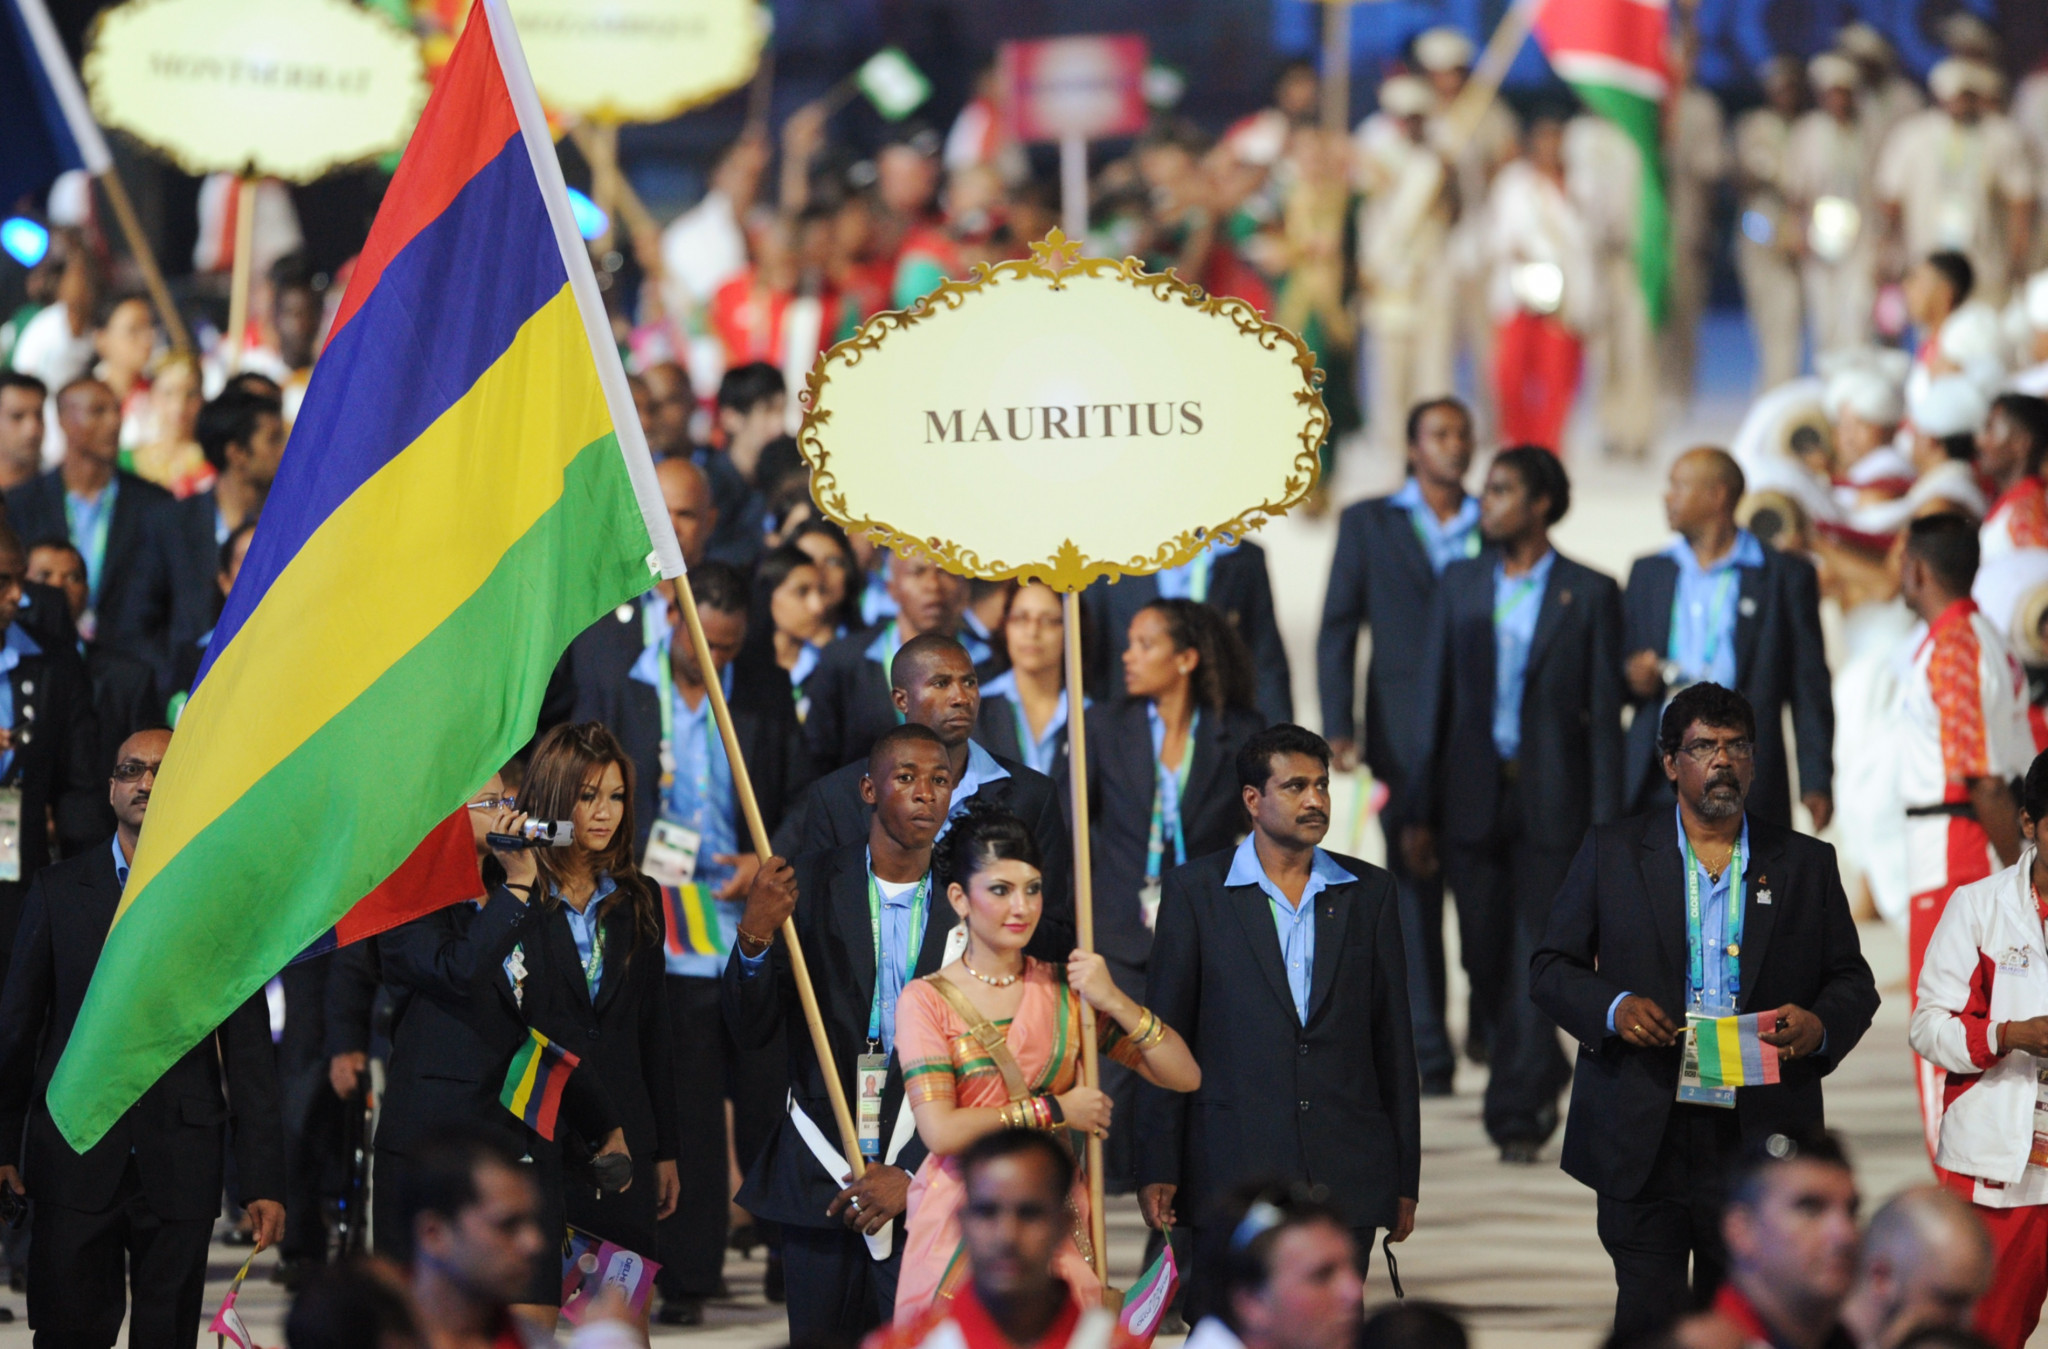 Mauritius eyeing improvement at Birmingham 2022 with 61 athletes picked